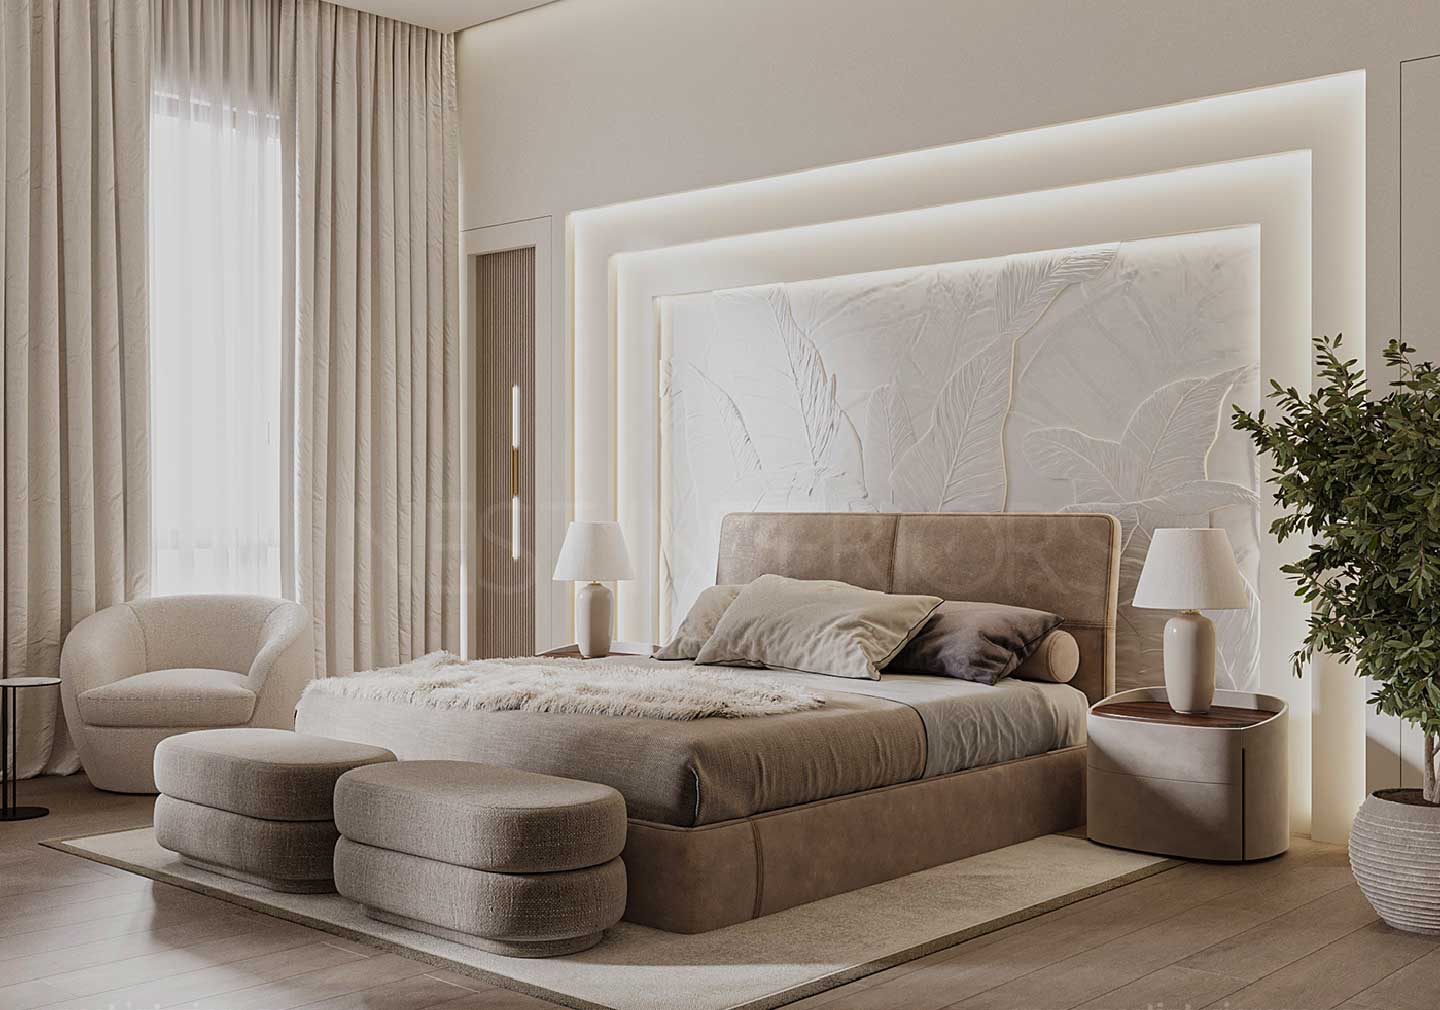 Plush Bedding: Indulgence Redefined for bedroom interior designs